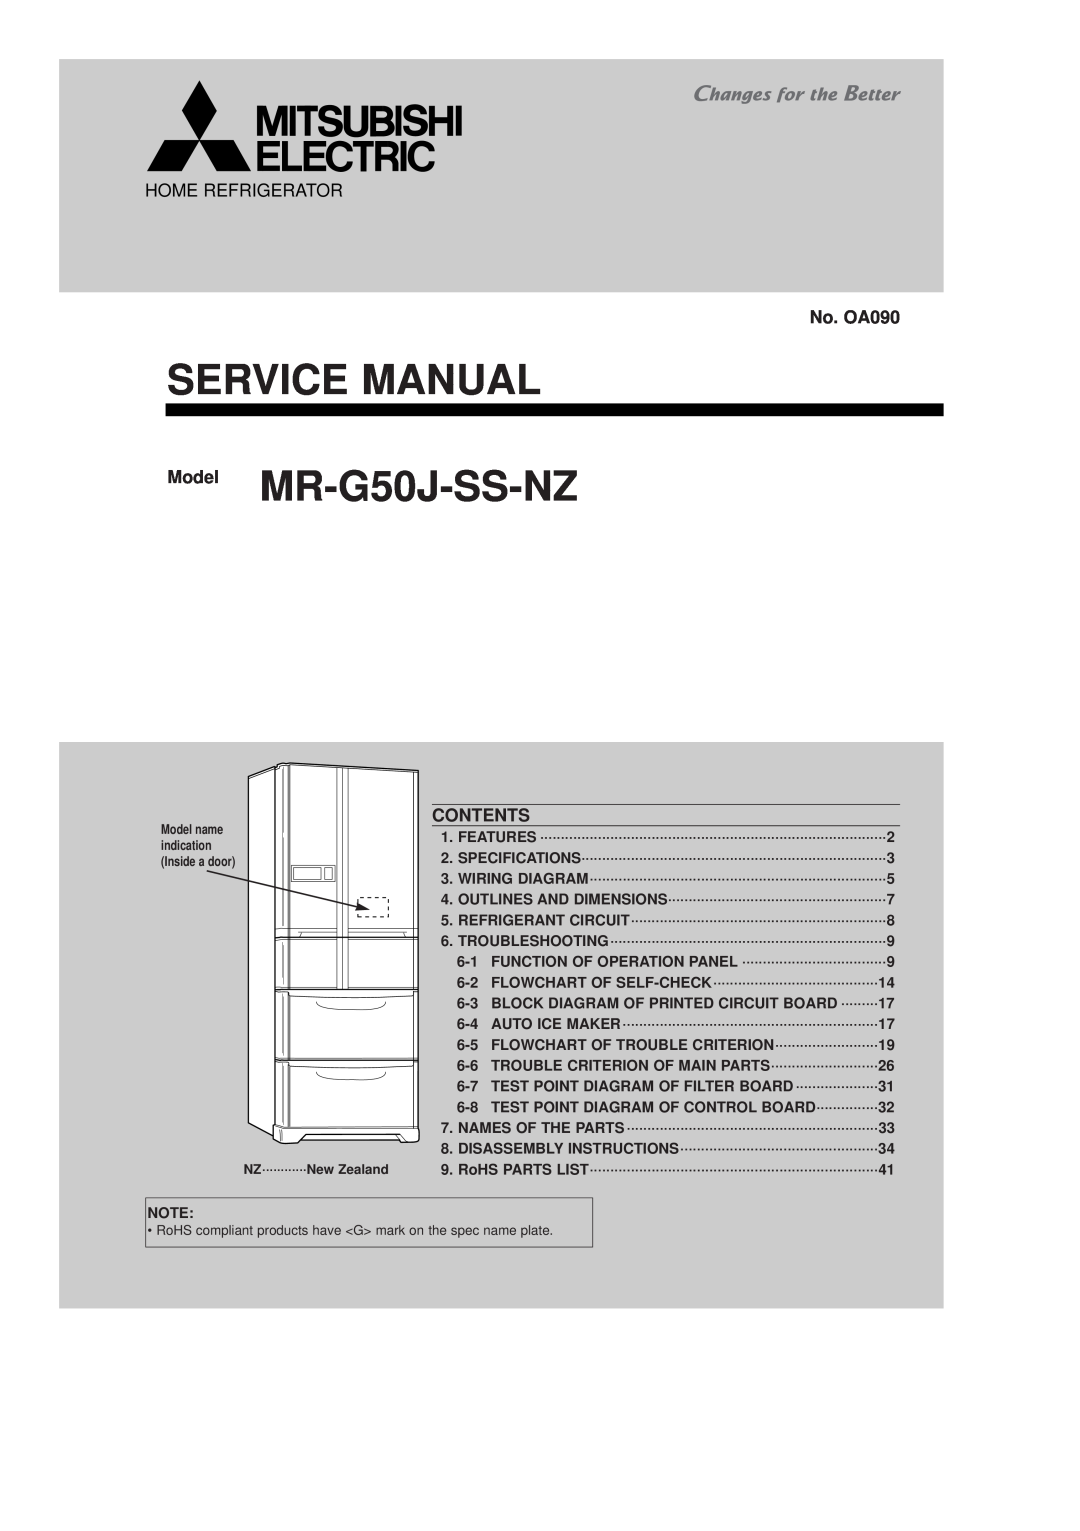 Mitsubishi Electronics MR-G50J-SS-NZ manual Home Refrigerator, No. OA090, Contents, Features ··························· 